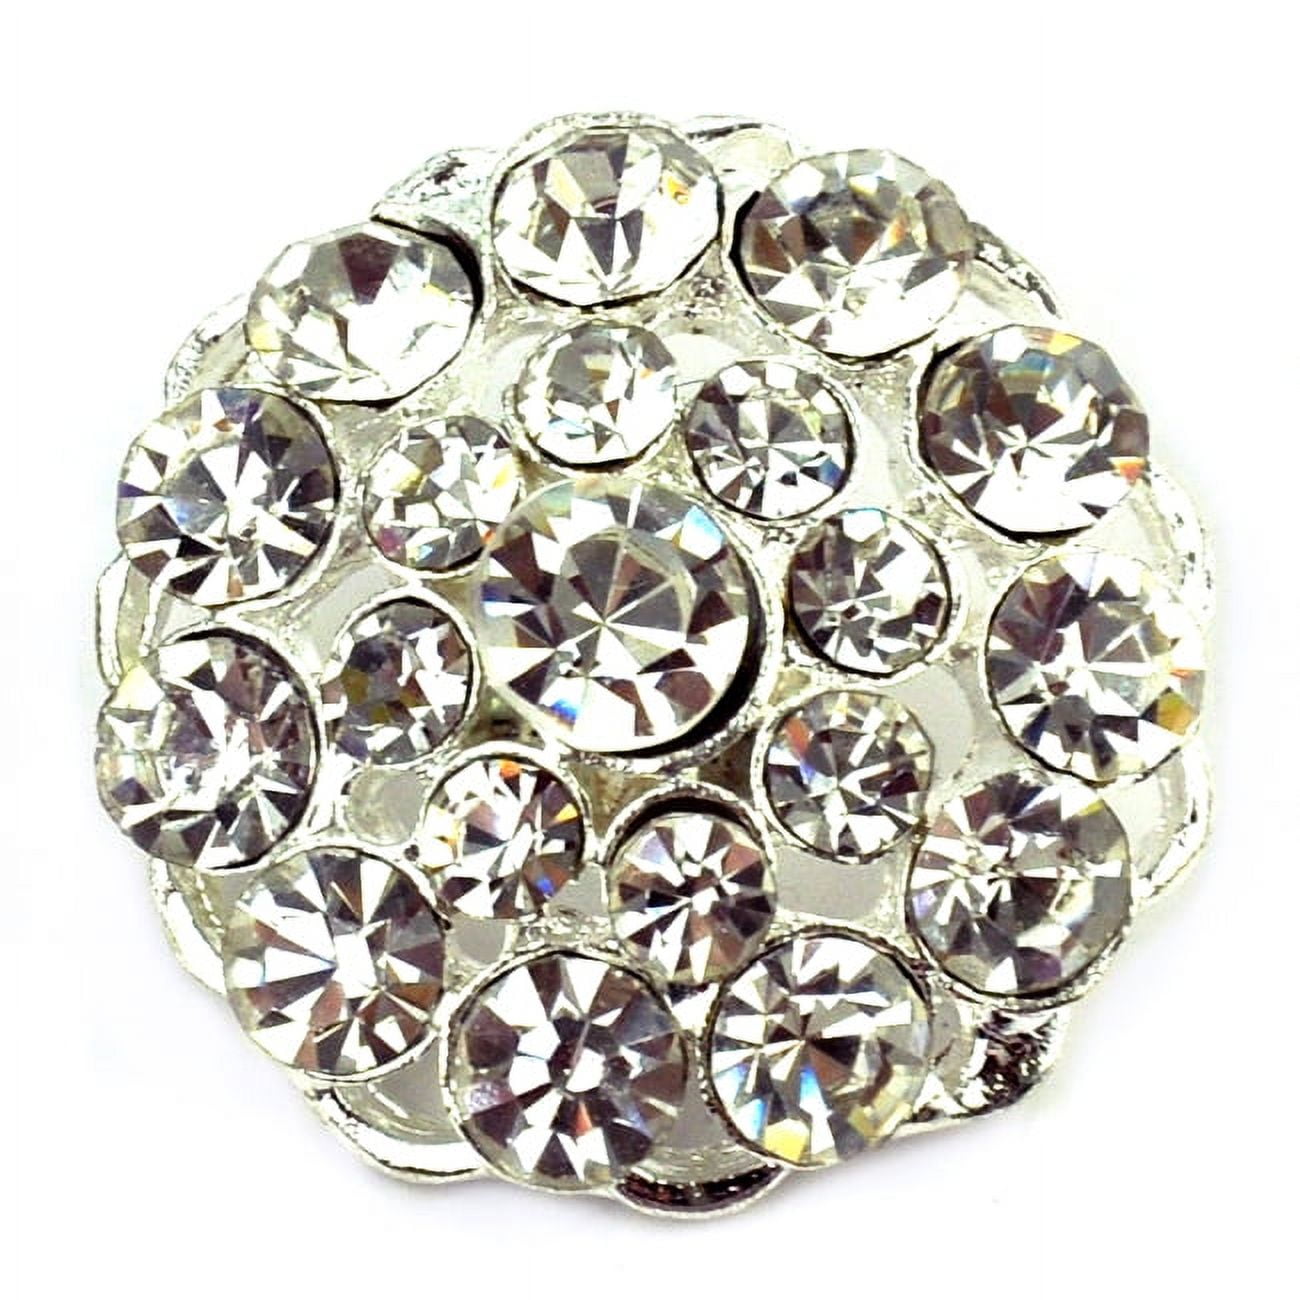 Buttons Jewel & Diamanté Rhinestone Shank Buttons, Silver Finish